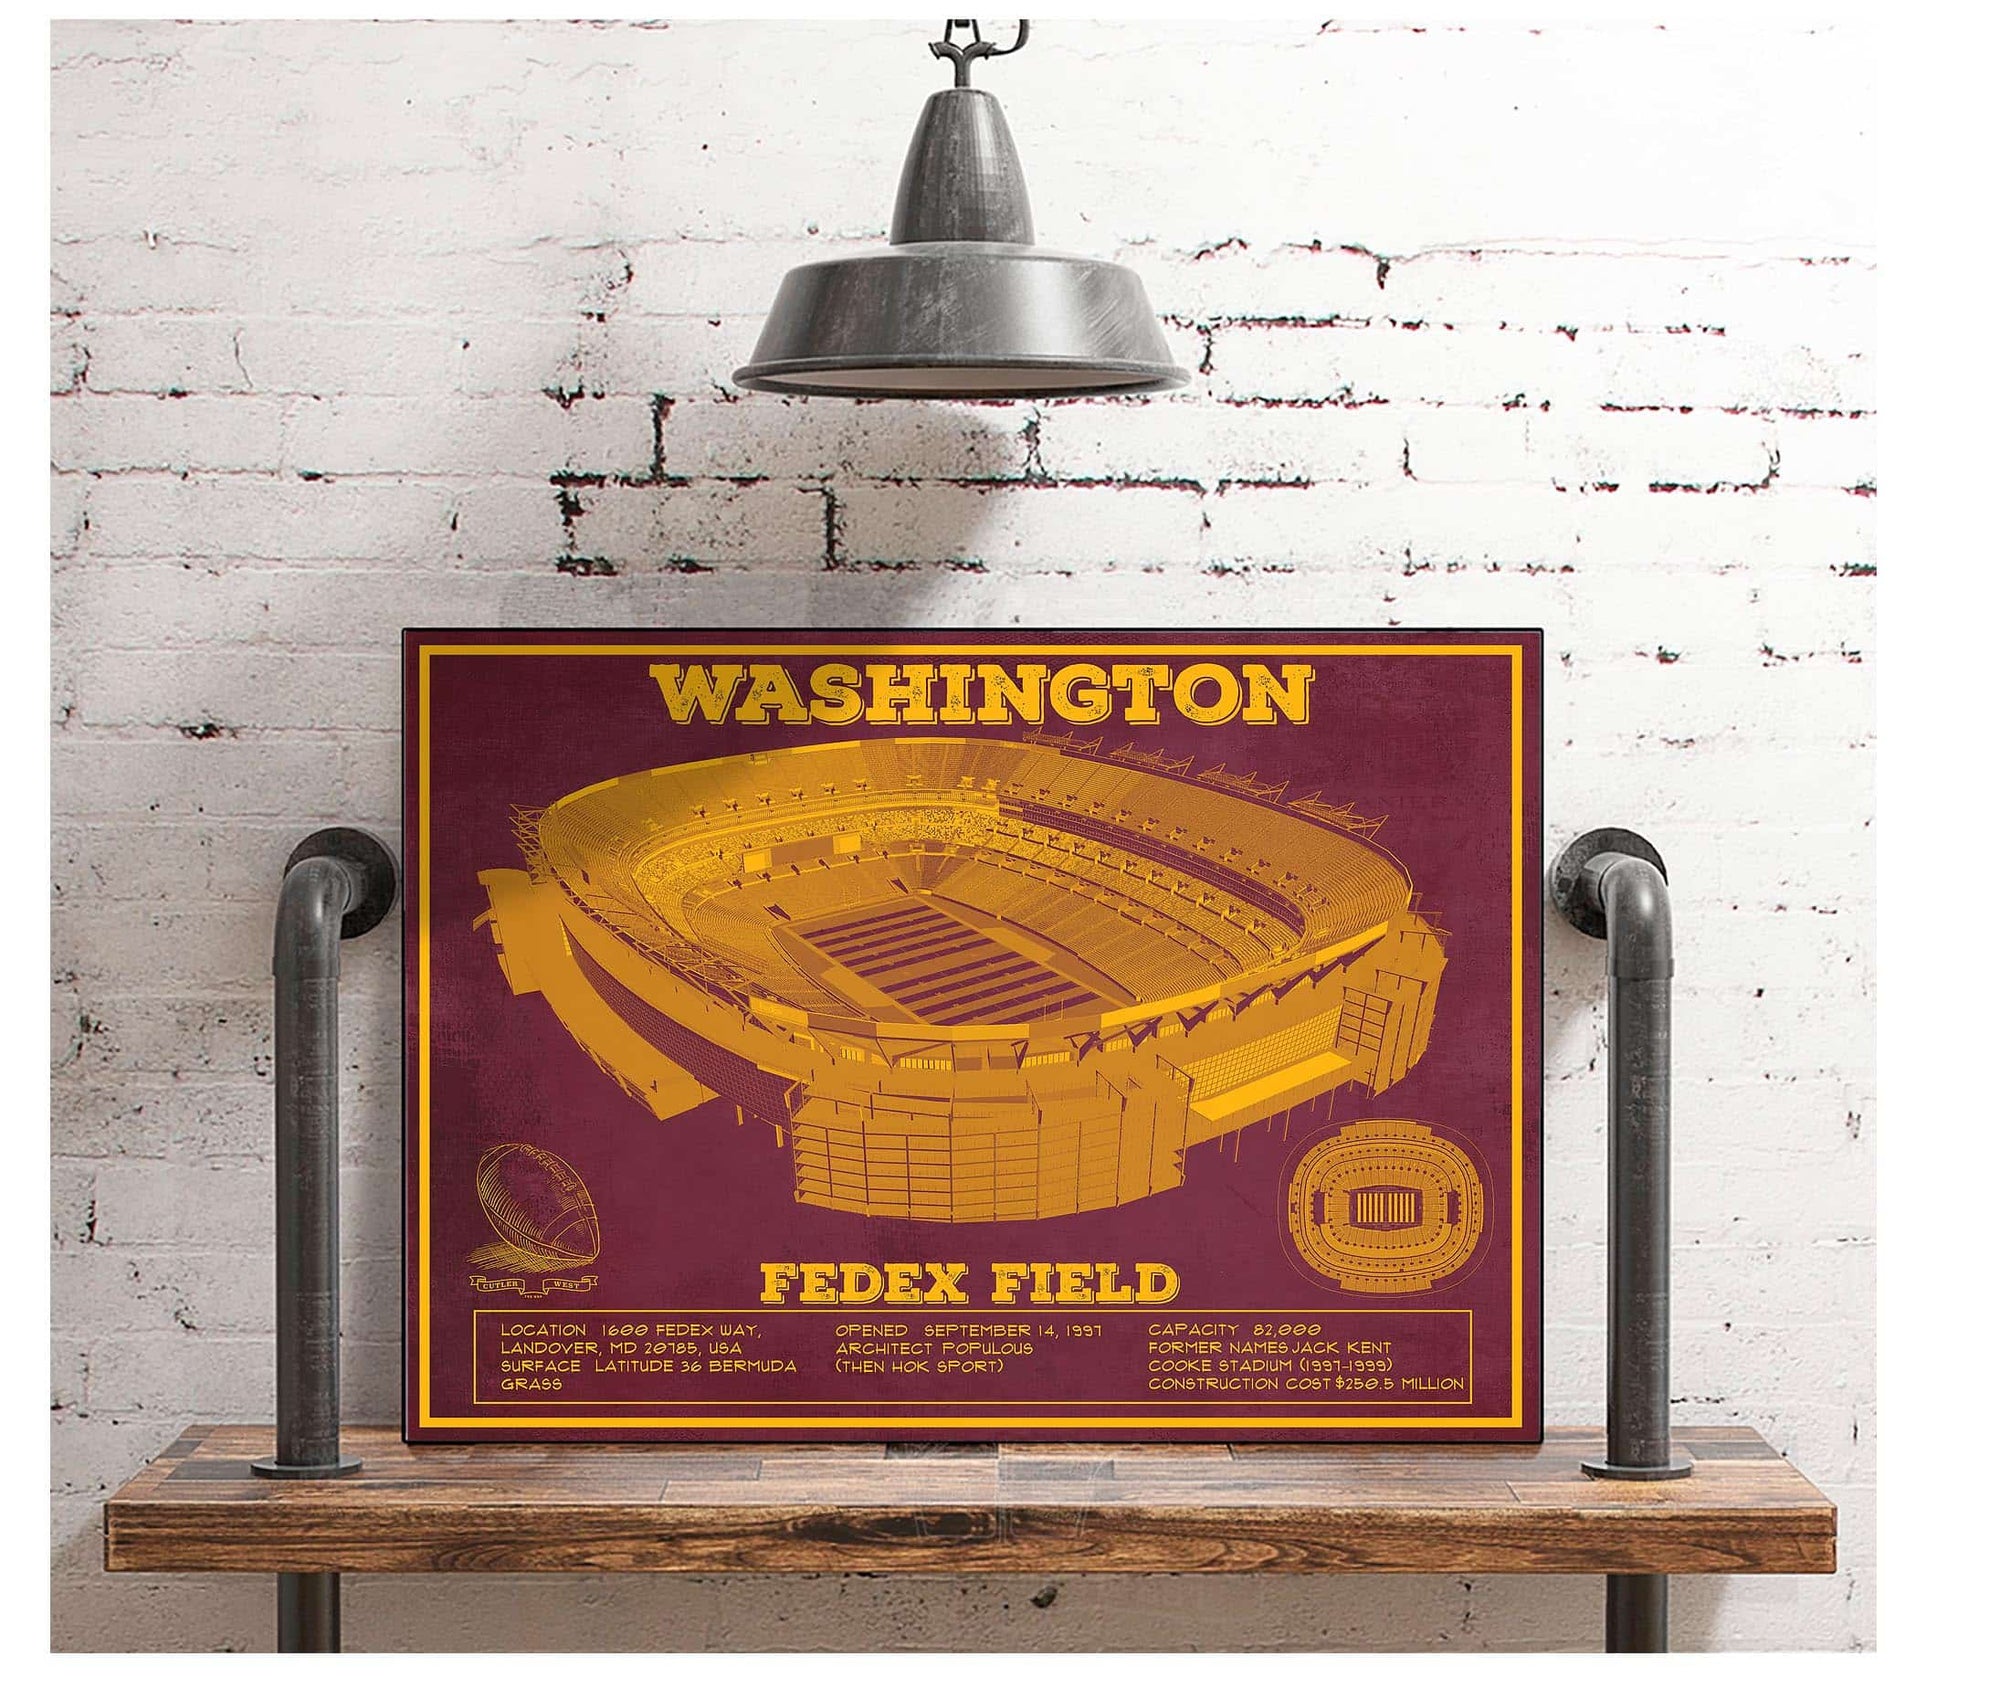 Cutler West Washington Football Team Stadium Art - Fedex Field Wall Art